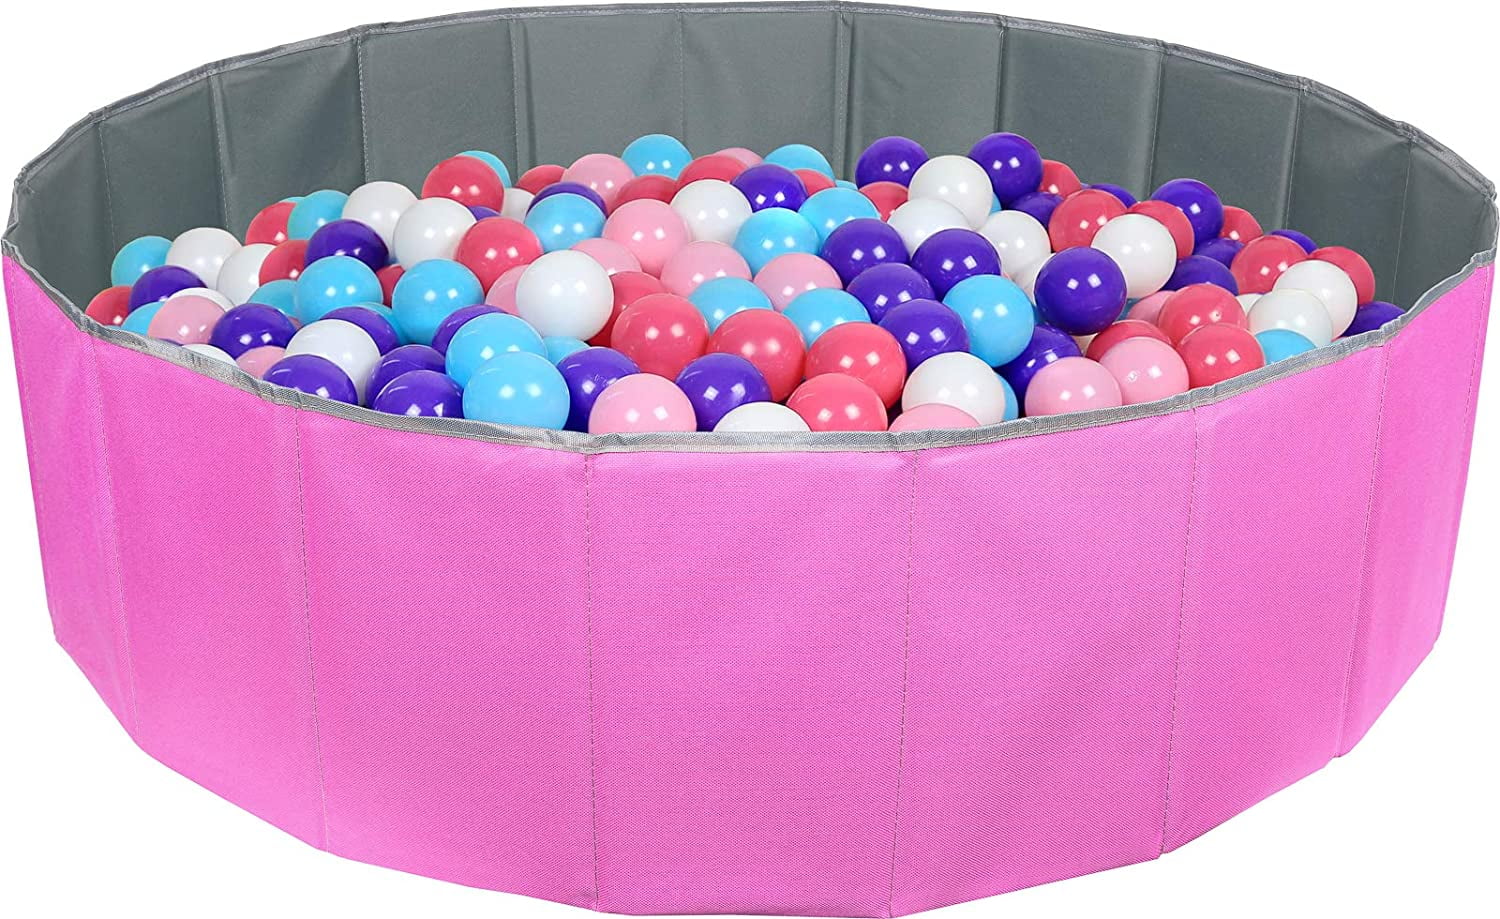 UK 10x Ball Ocean Balls Soft Plastic Ocean Ball Baby  Swim Toy Random Color 